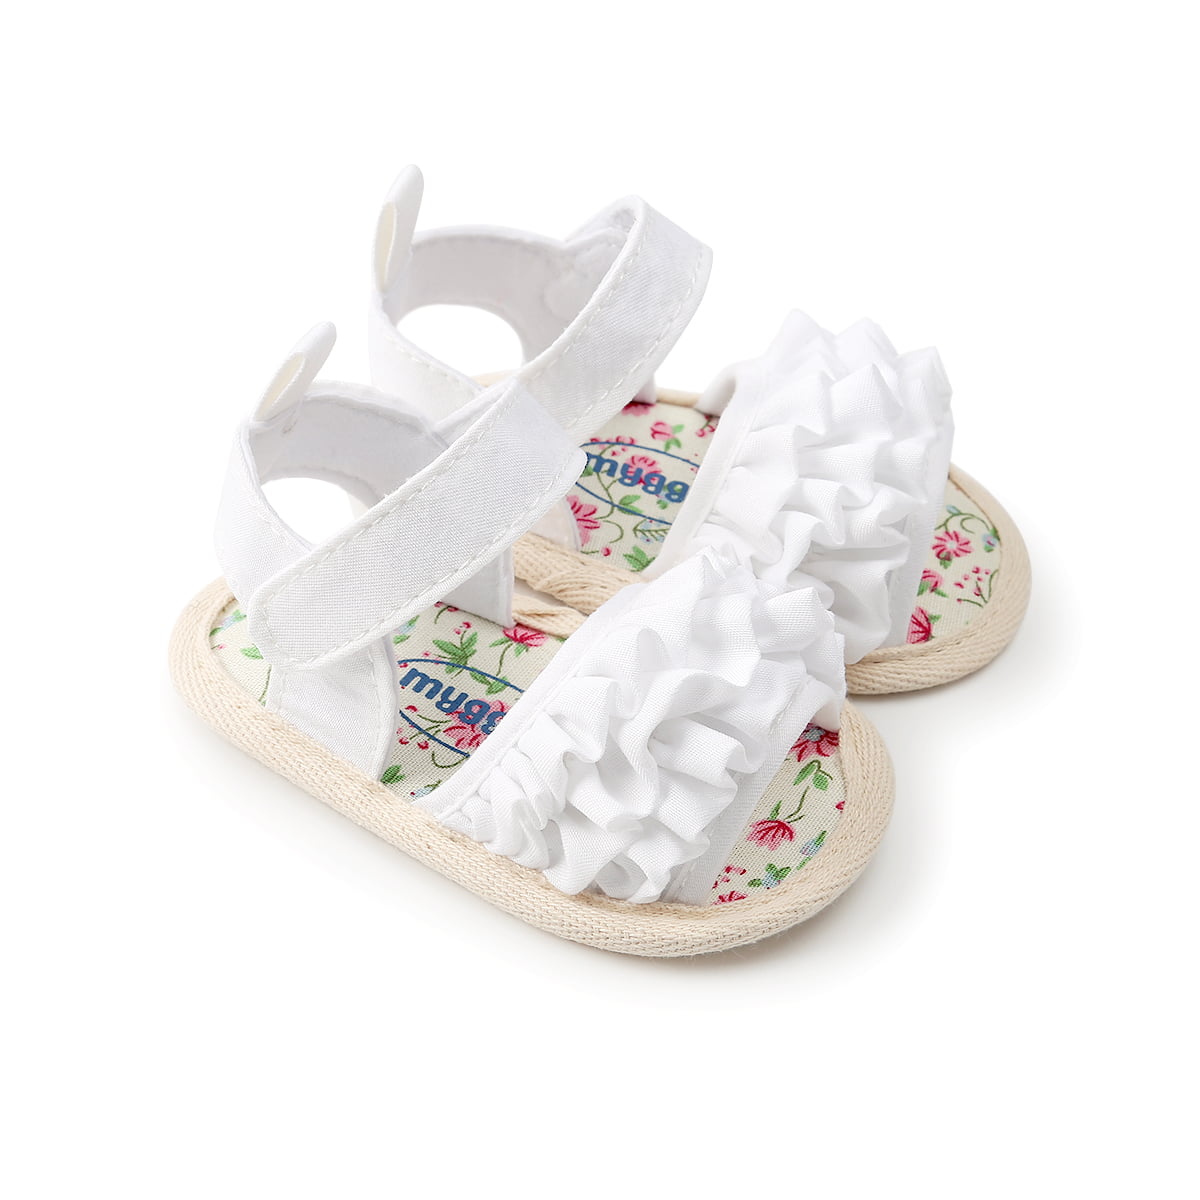 Newborn Baby Fashion Summer Soft Crib Shoes First Walker Anti-Slip Sandals Flats 